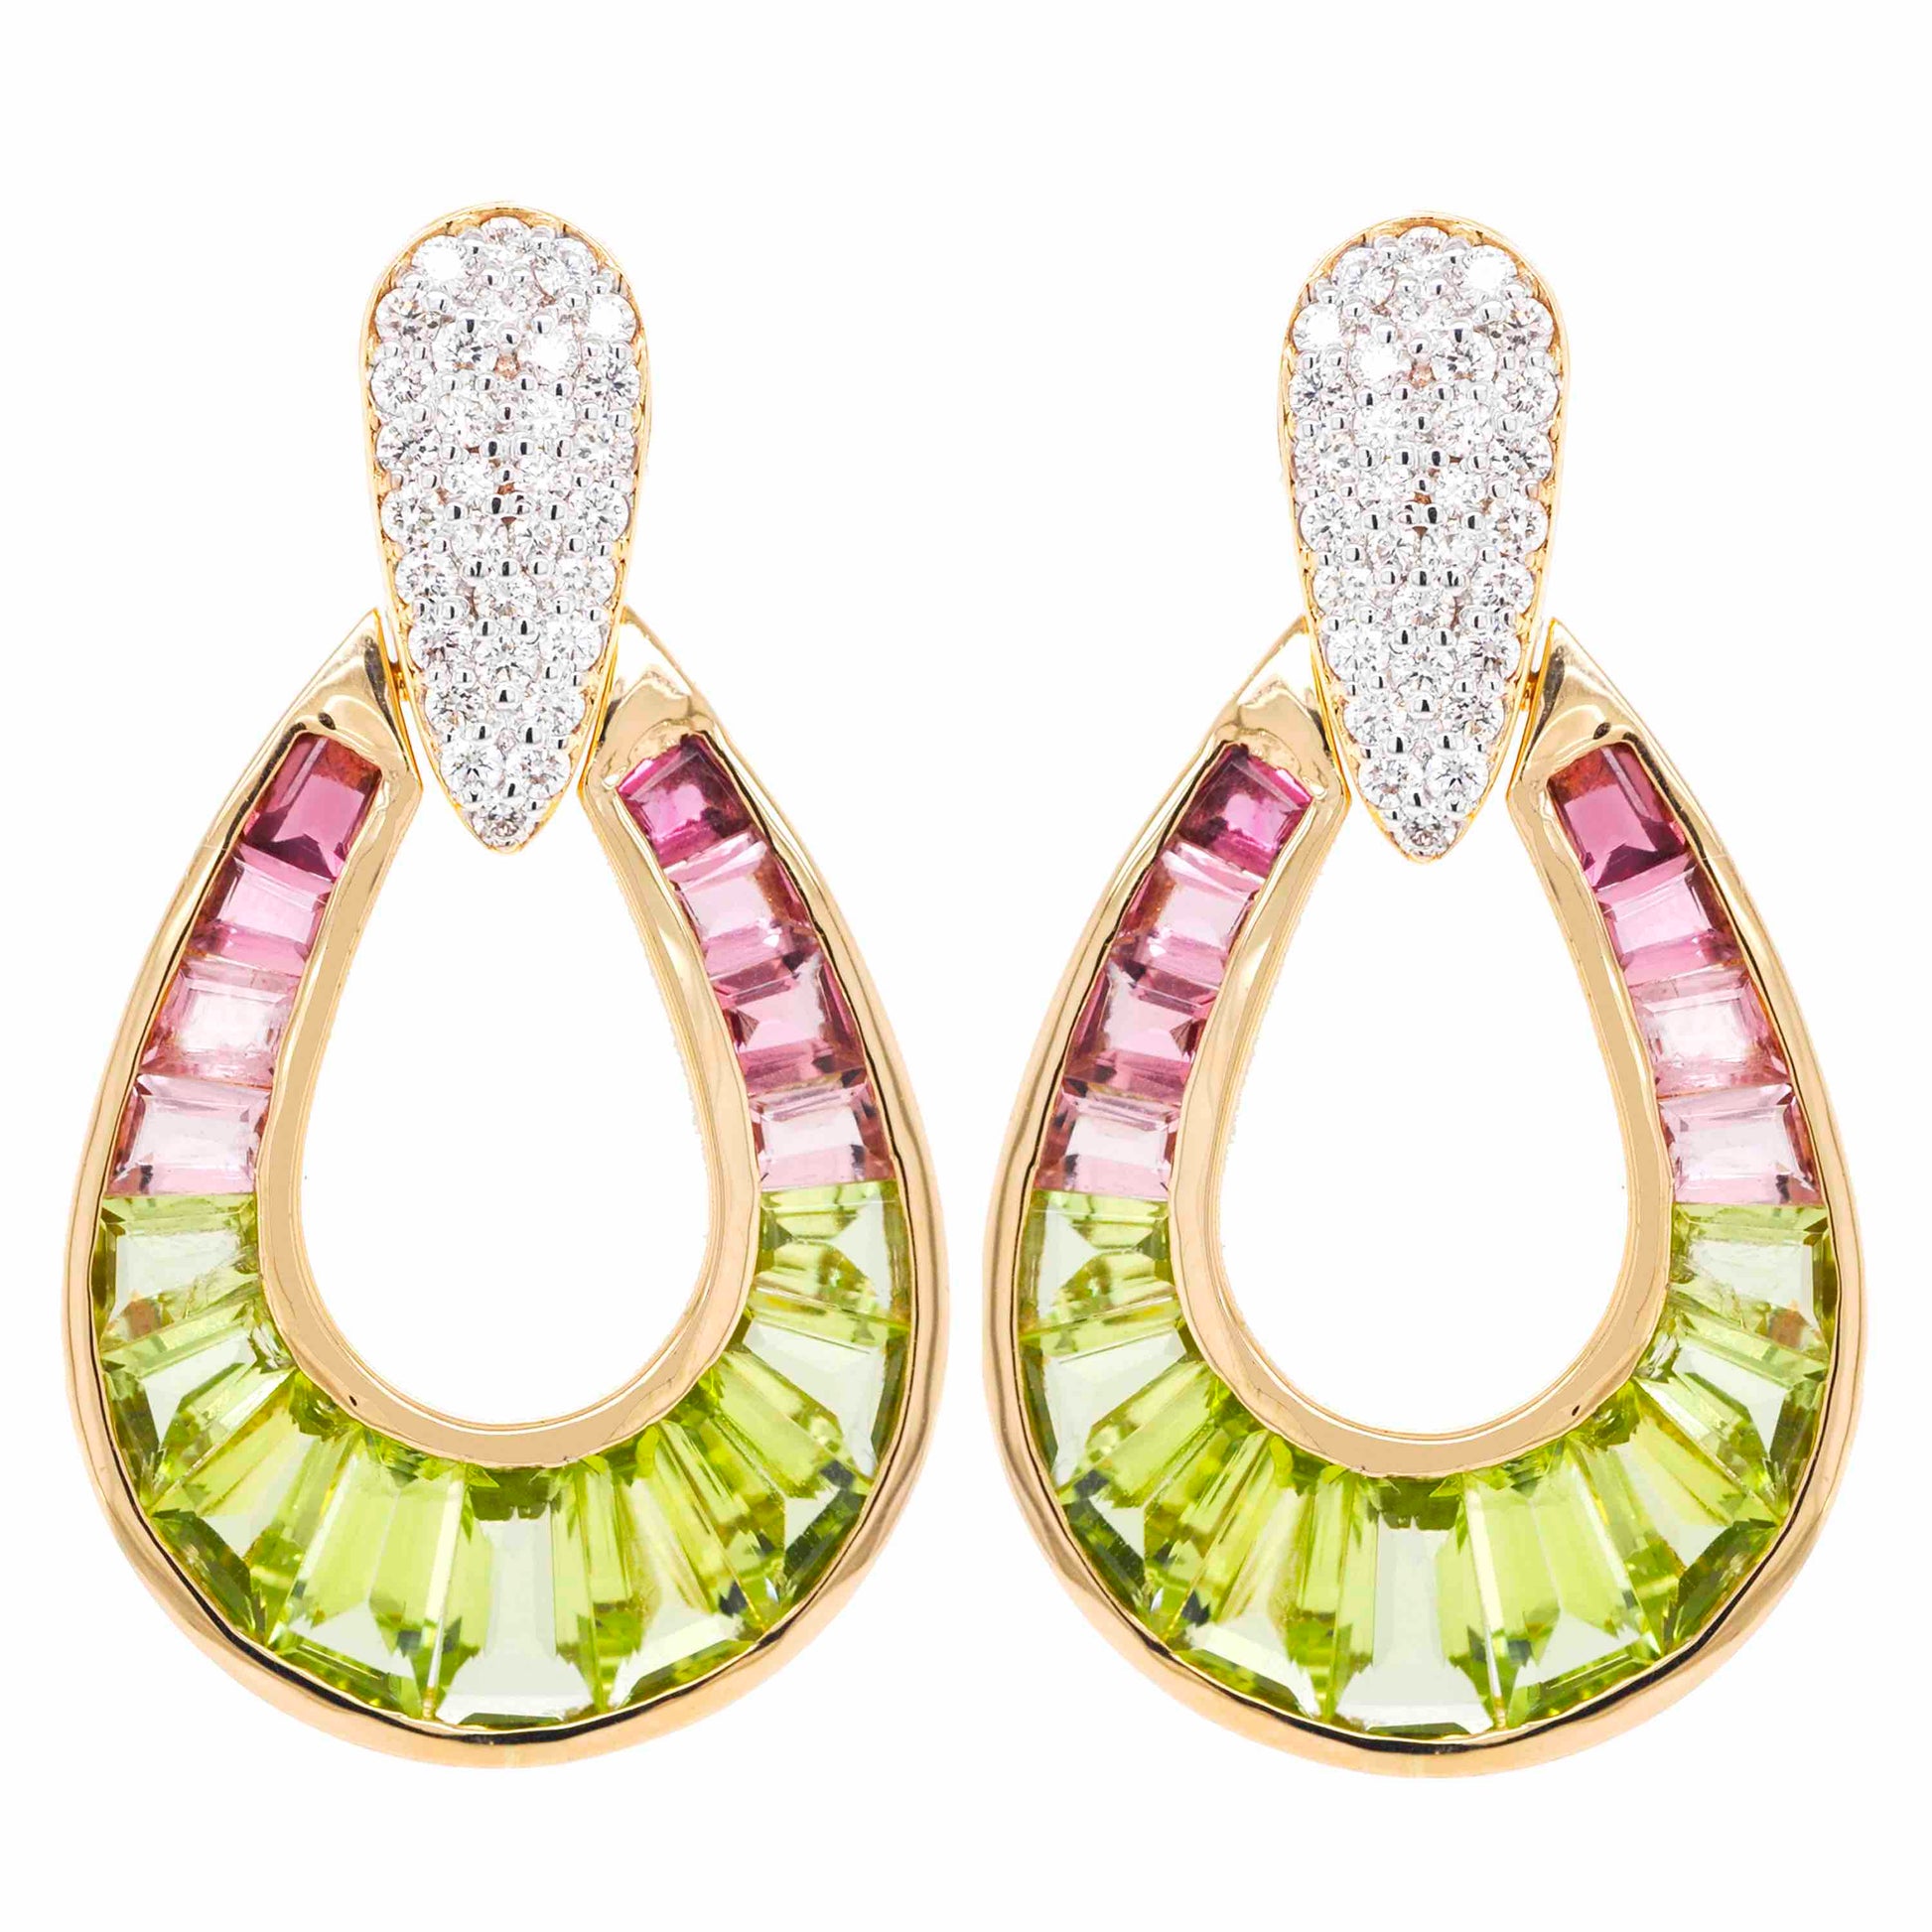 Unique raindrop-shaped pink tourmaline and diamond drop earrings